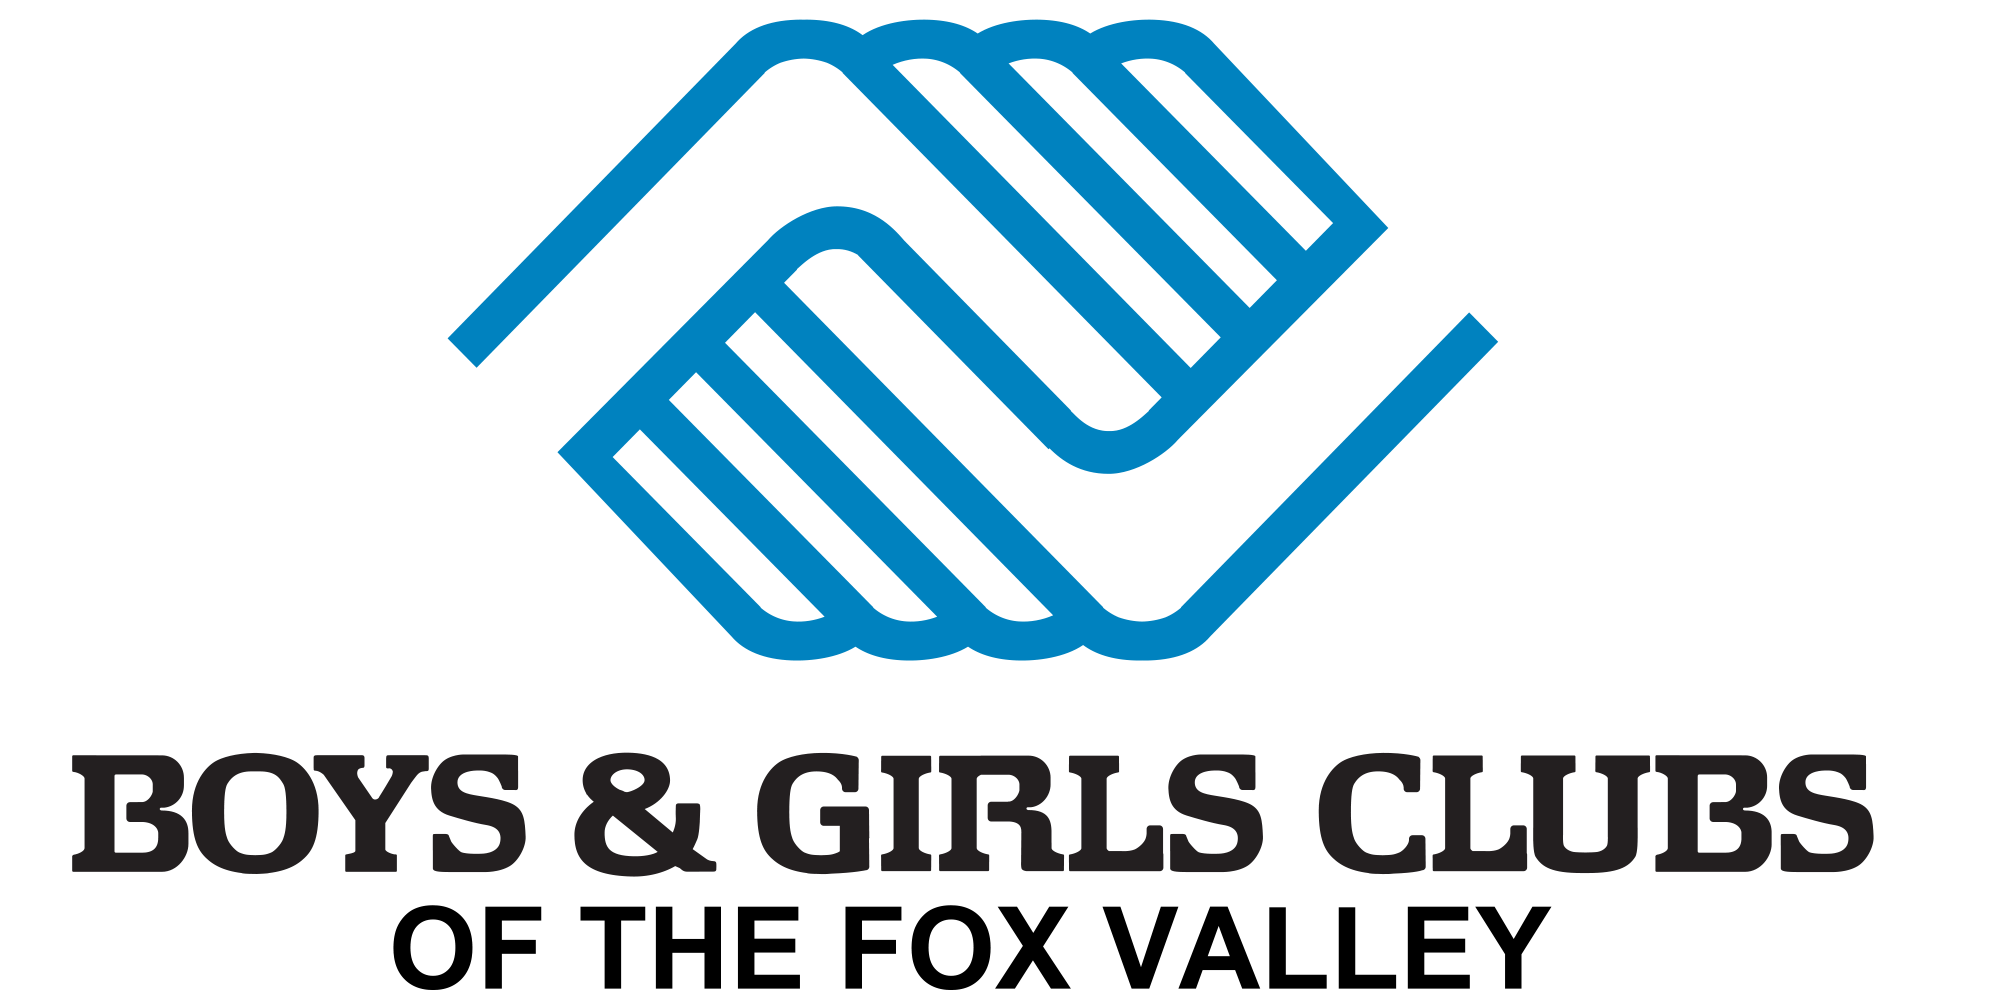 Boys & Girls Clubs of the Fox Valley logo